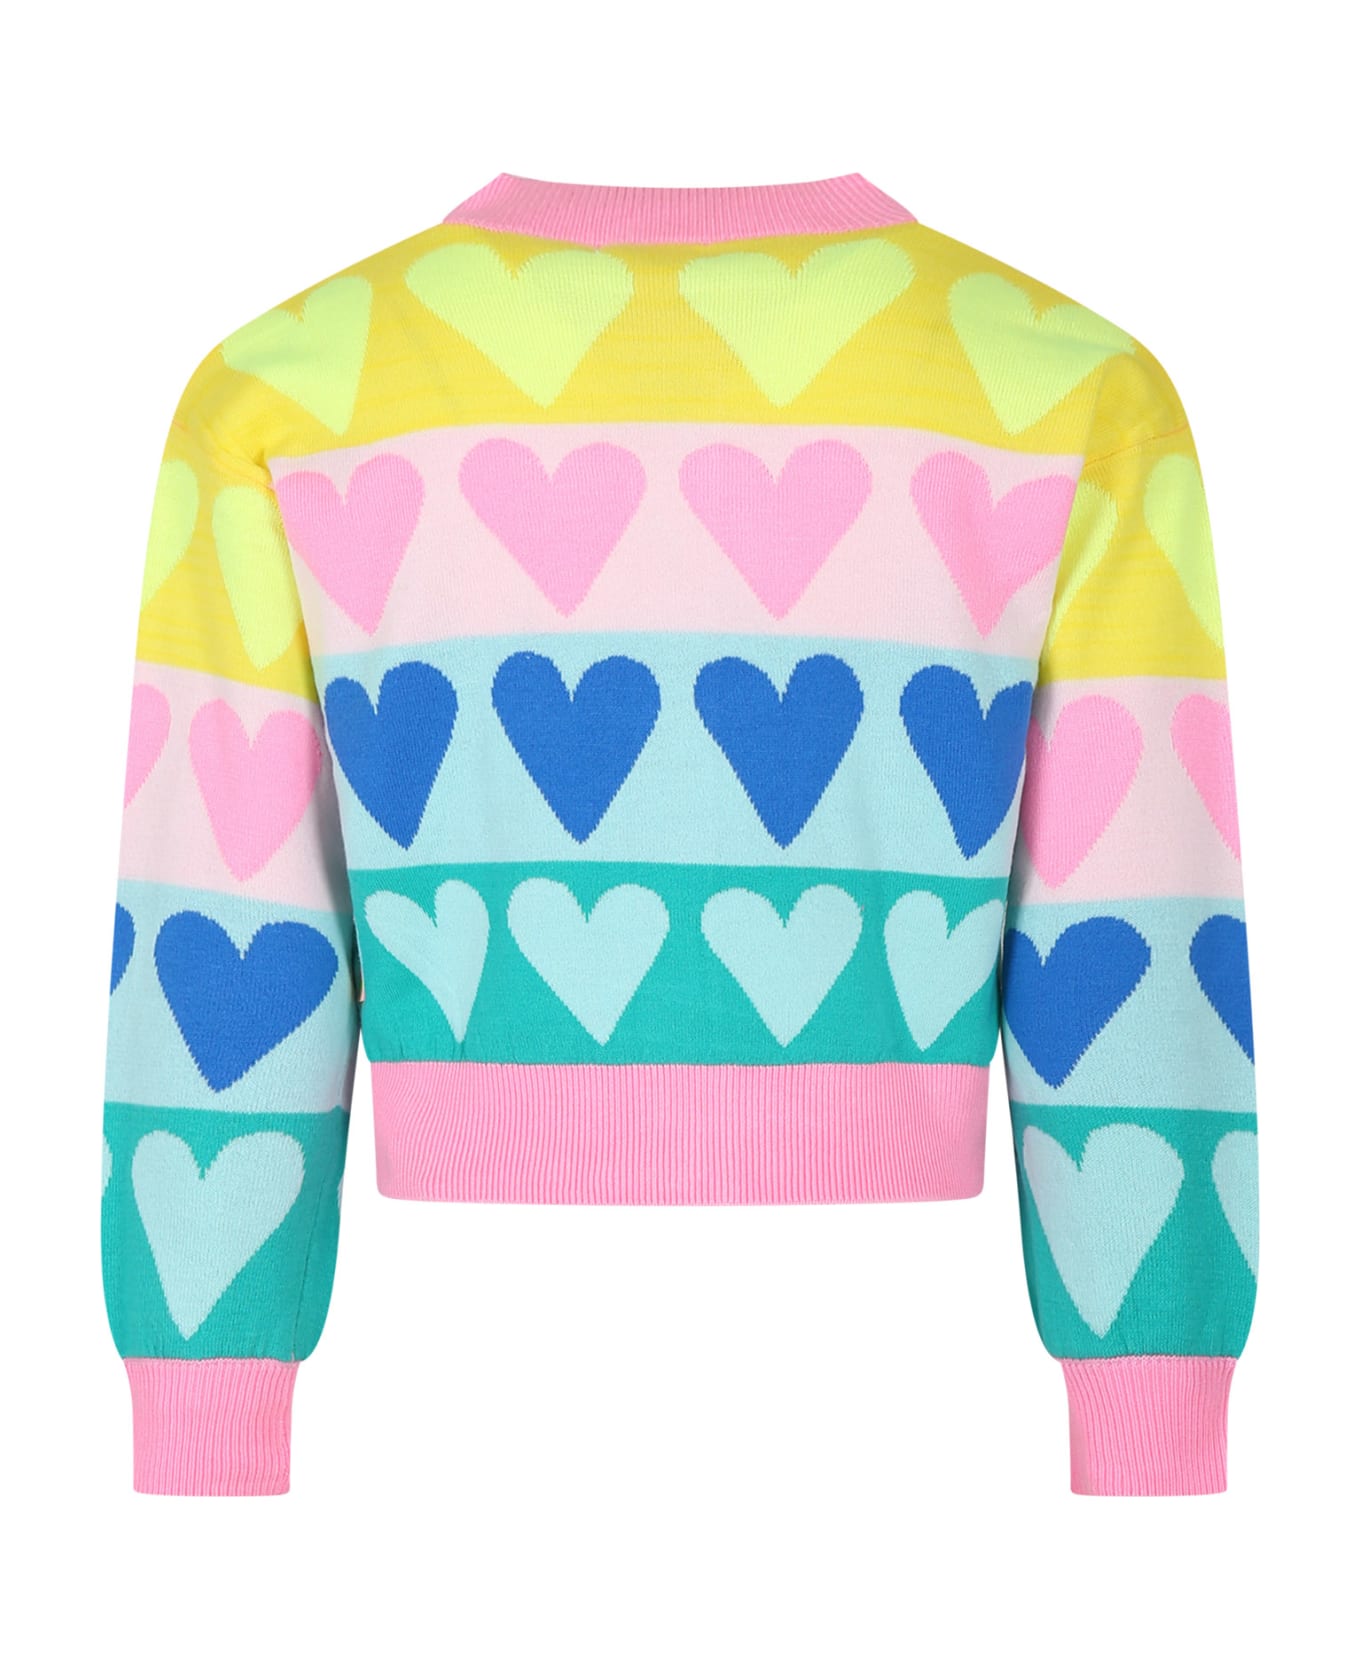 Billieblush Multicolor Cardigan For Girl With Hearts - Multicolor